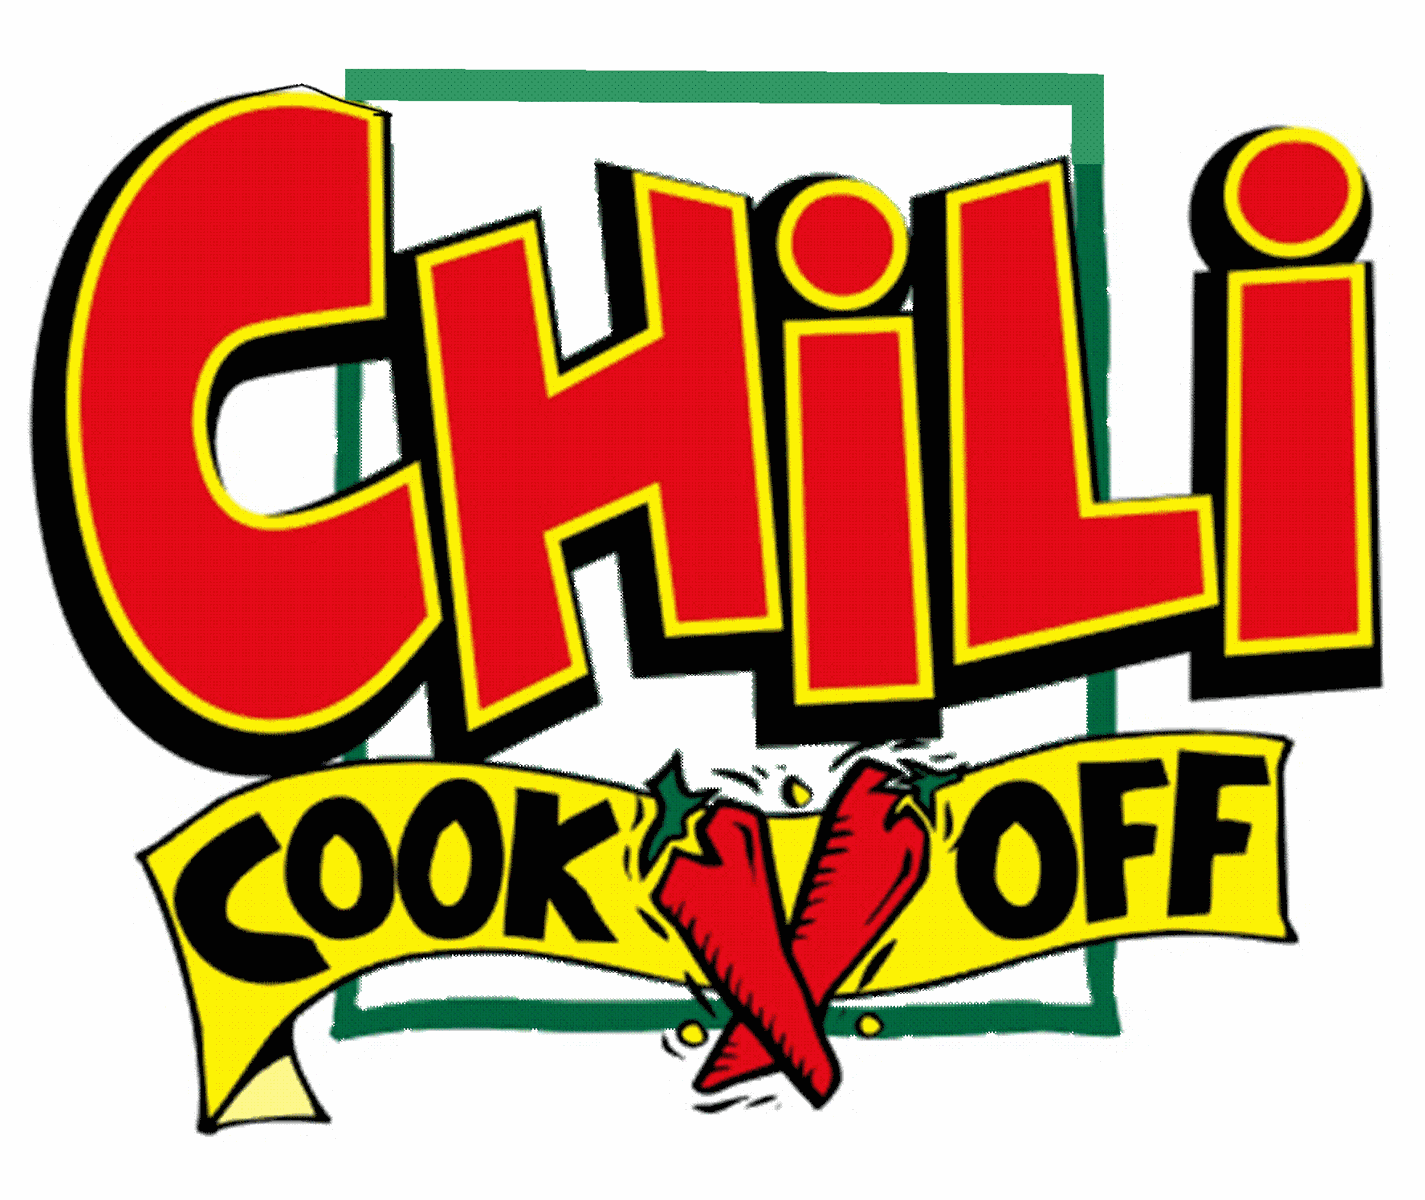 Chili Cook Off Clip Art Free